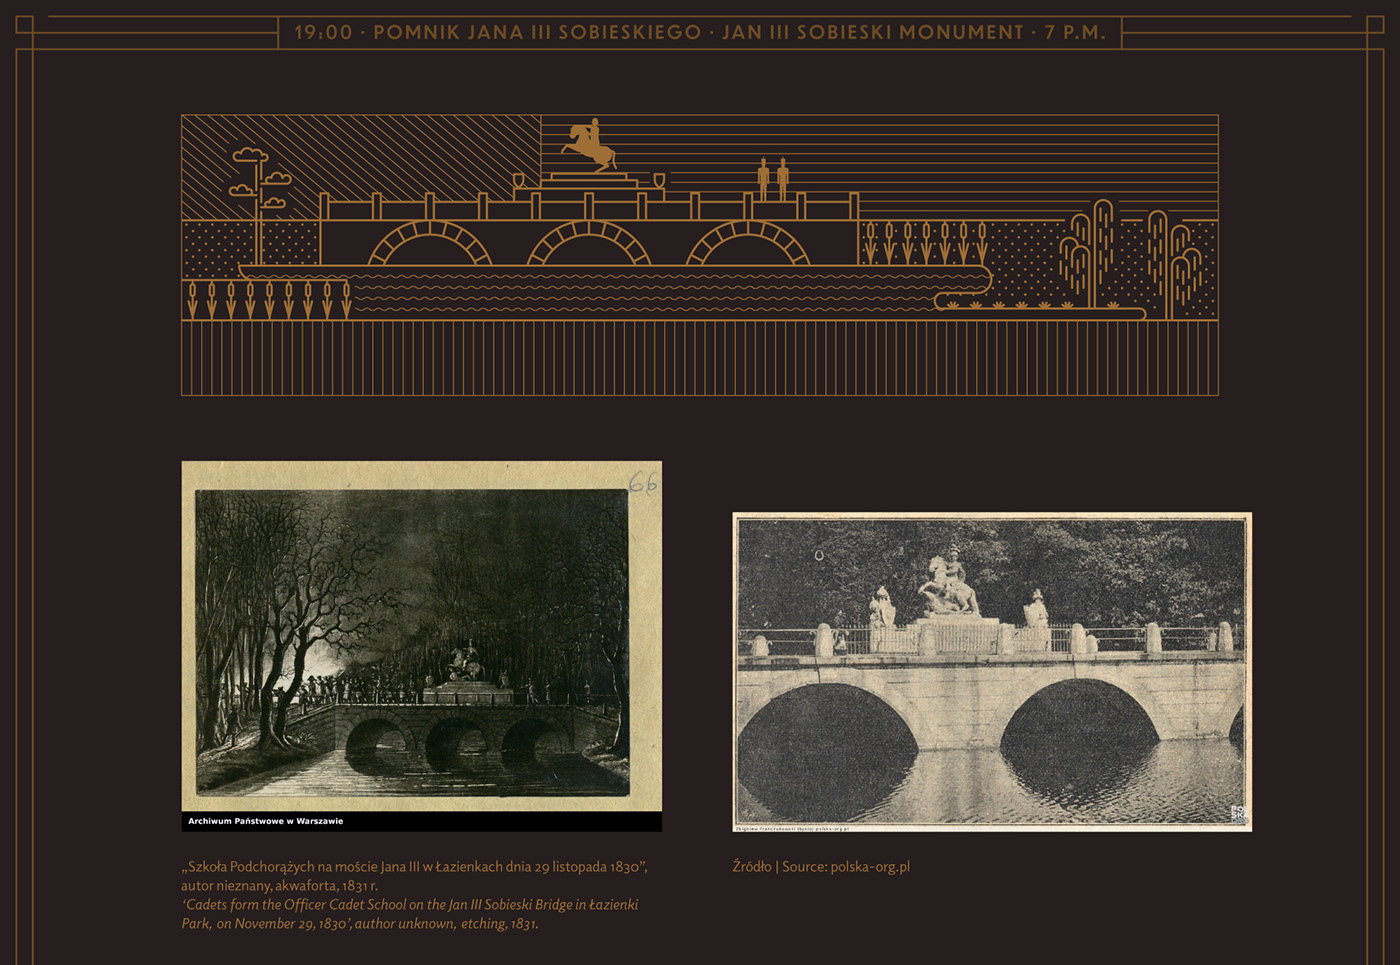 Inspiration for Jan III Sobieski bridge and monument illustration.